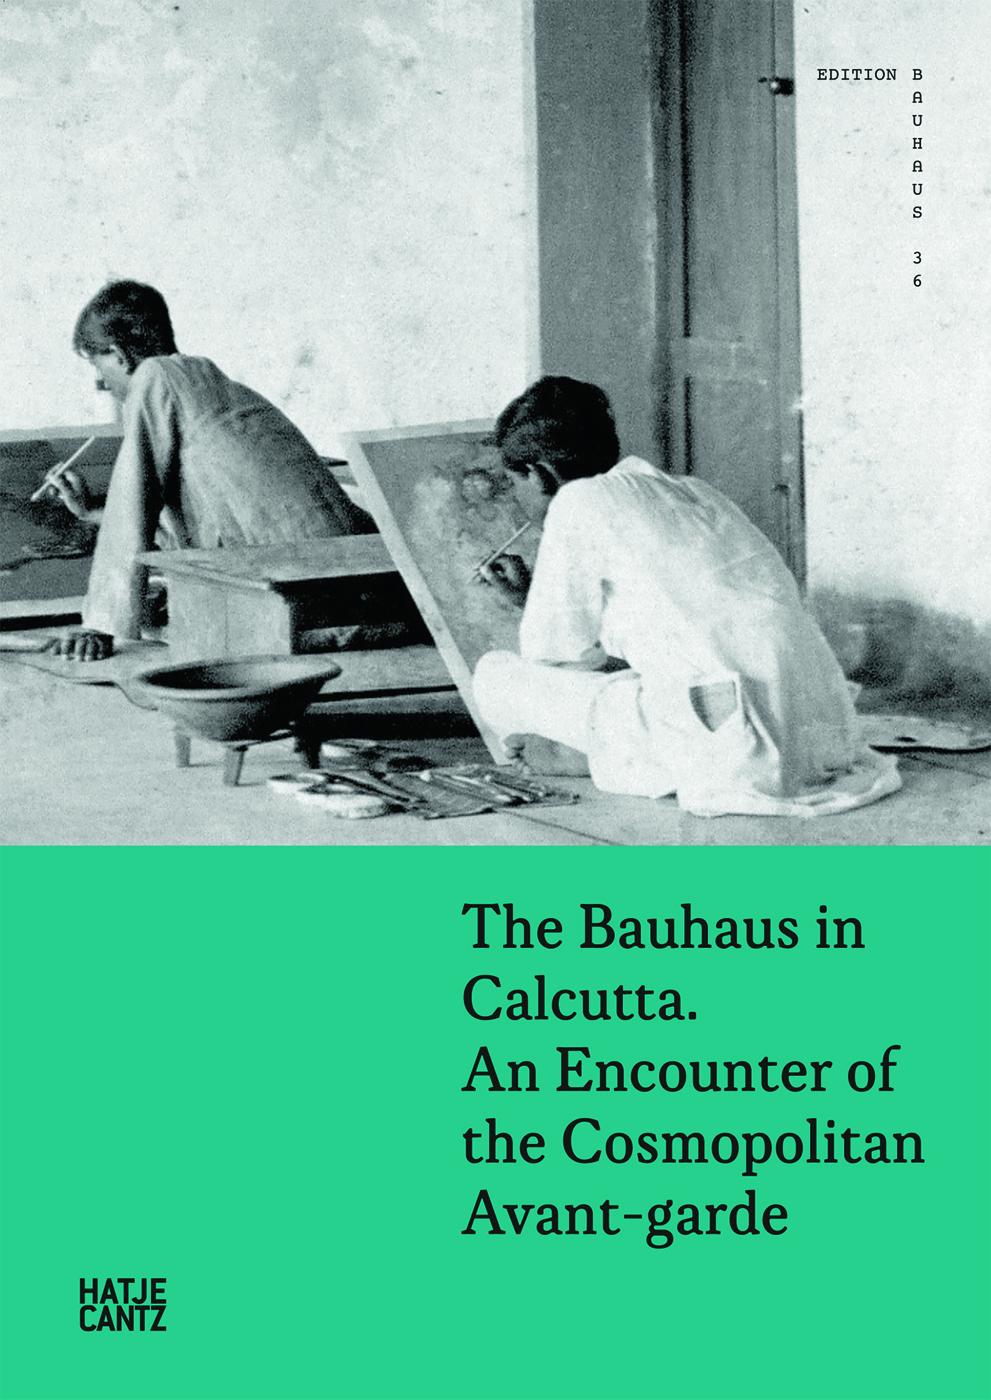 The Bauhaus in Calcutta - Book at Kavi Gupta Editions